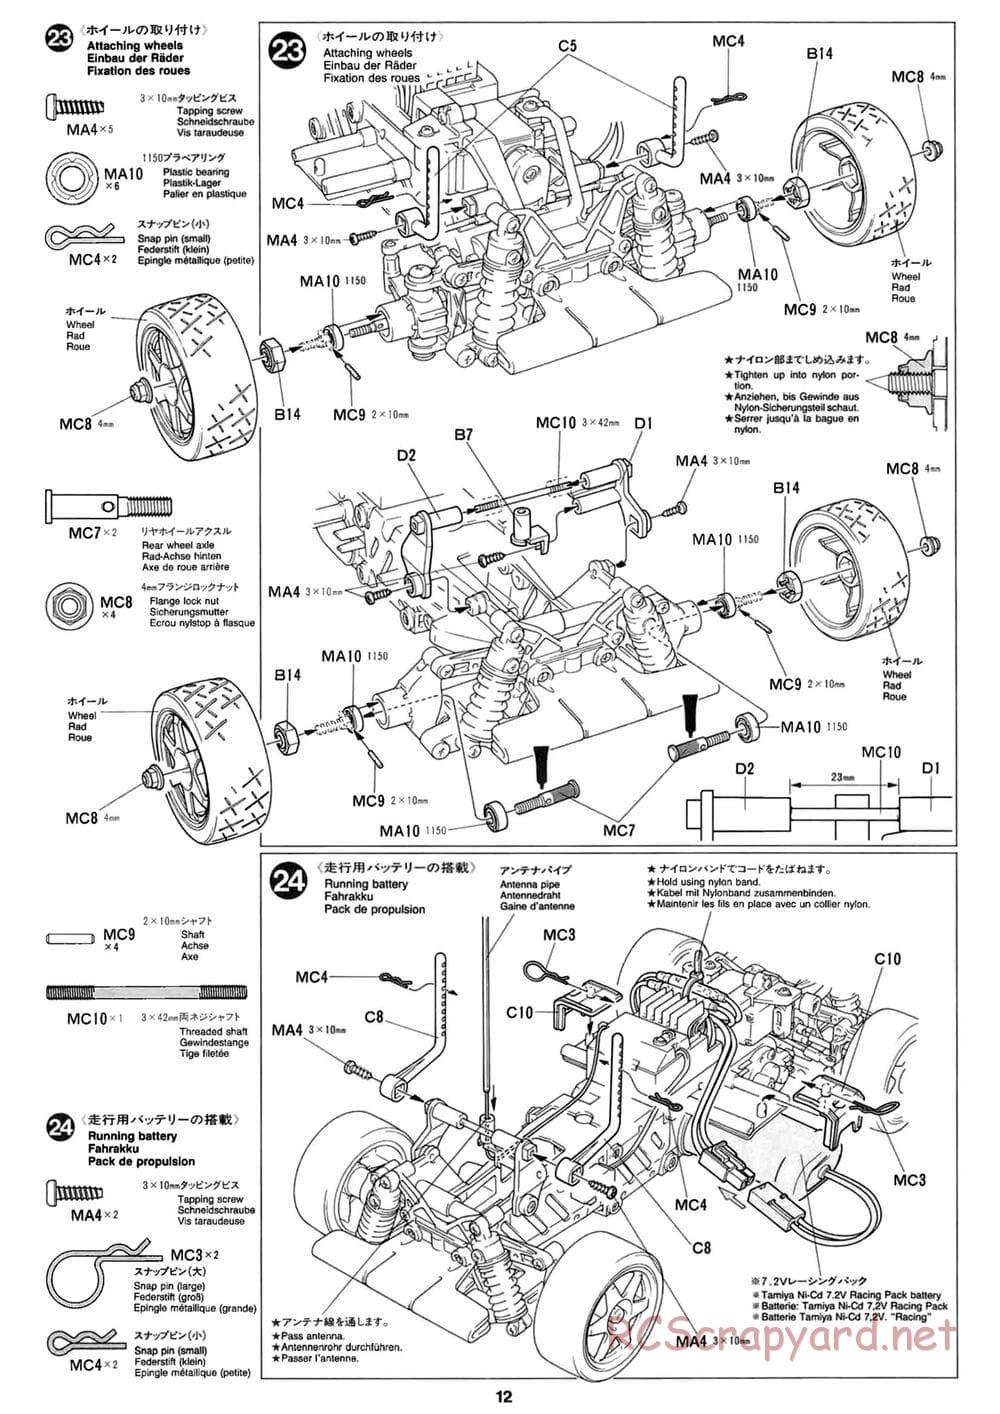 Tamiya - Peugeot 306 Maxi WRC - FF-02 Chassis - Manual - Page 12